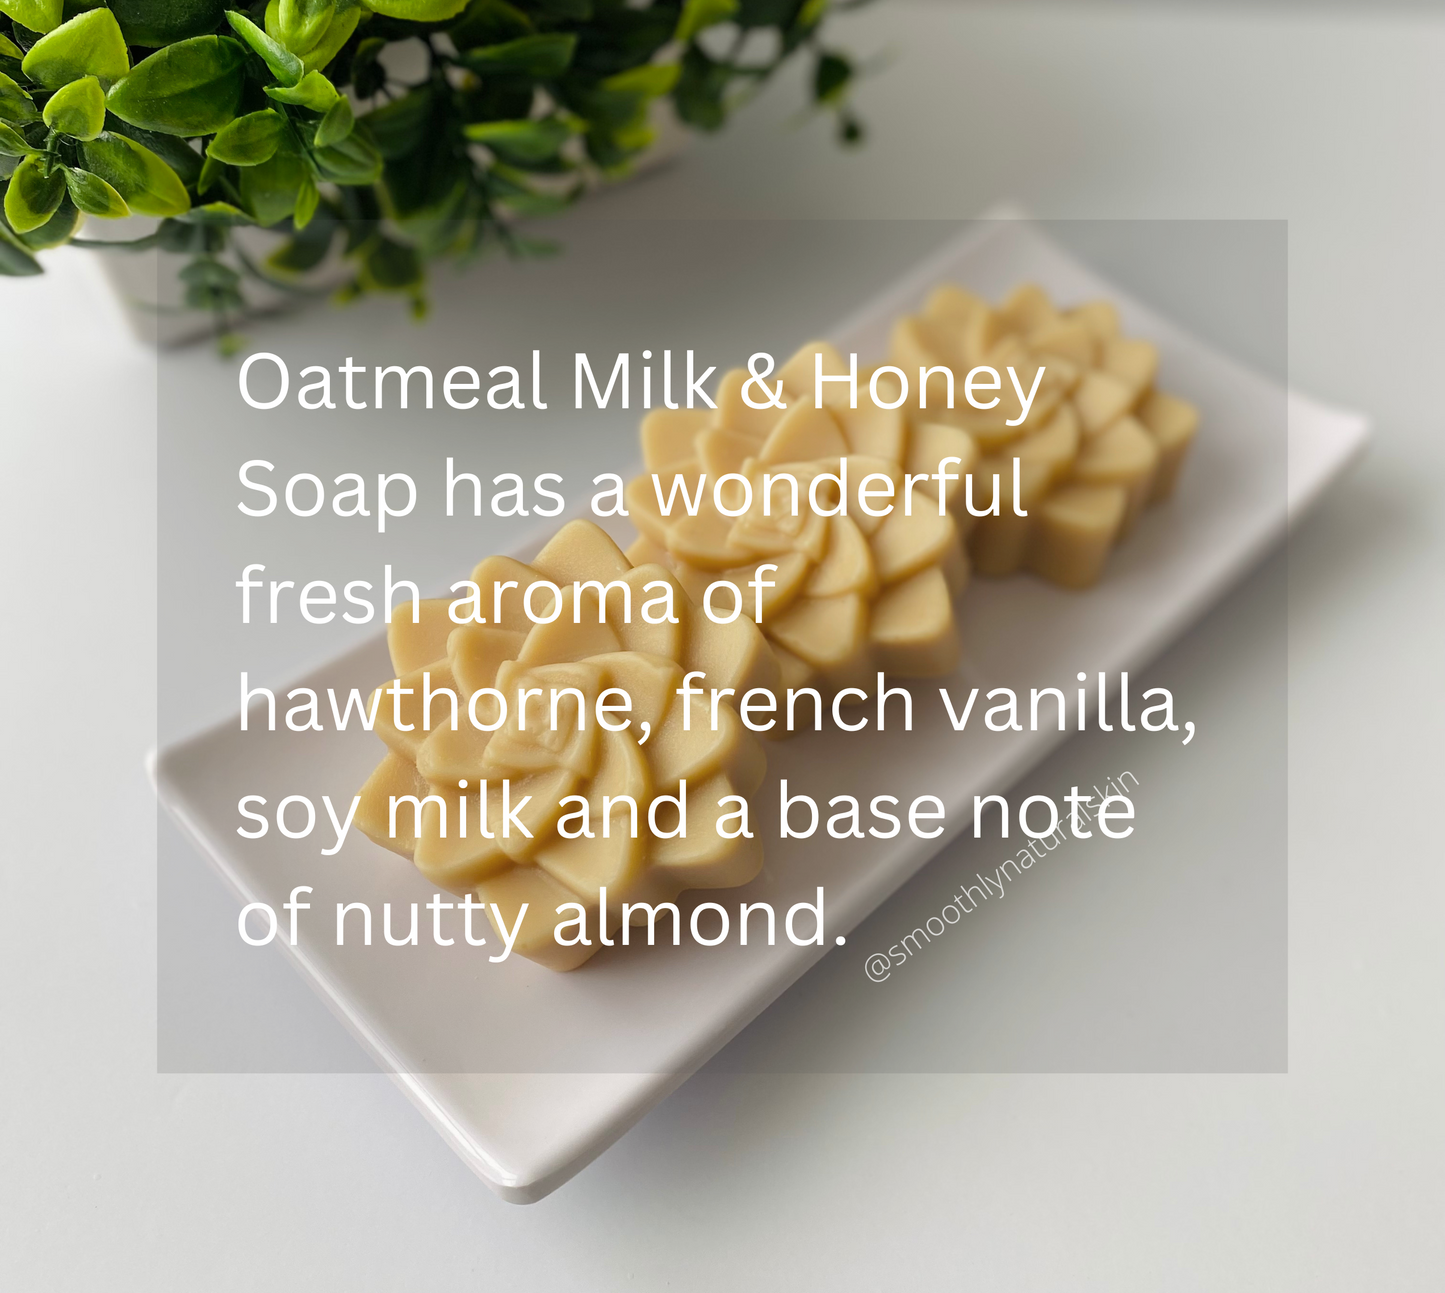 Oatmeal Milk & Honey Soap